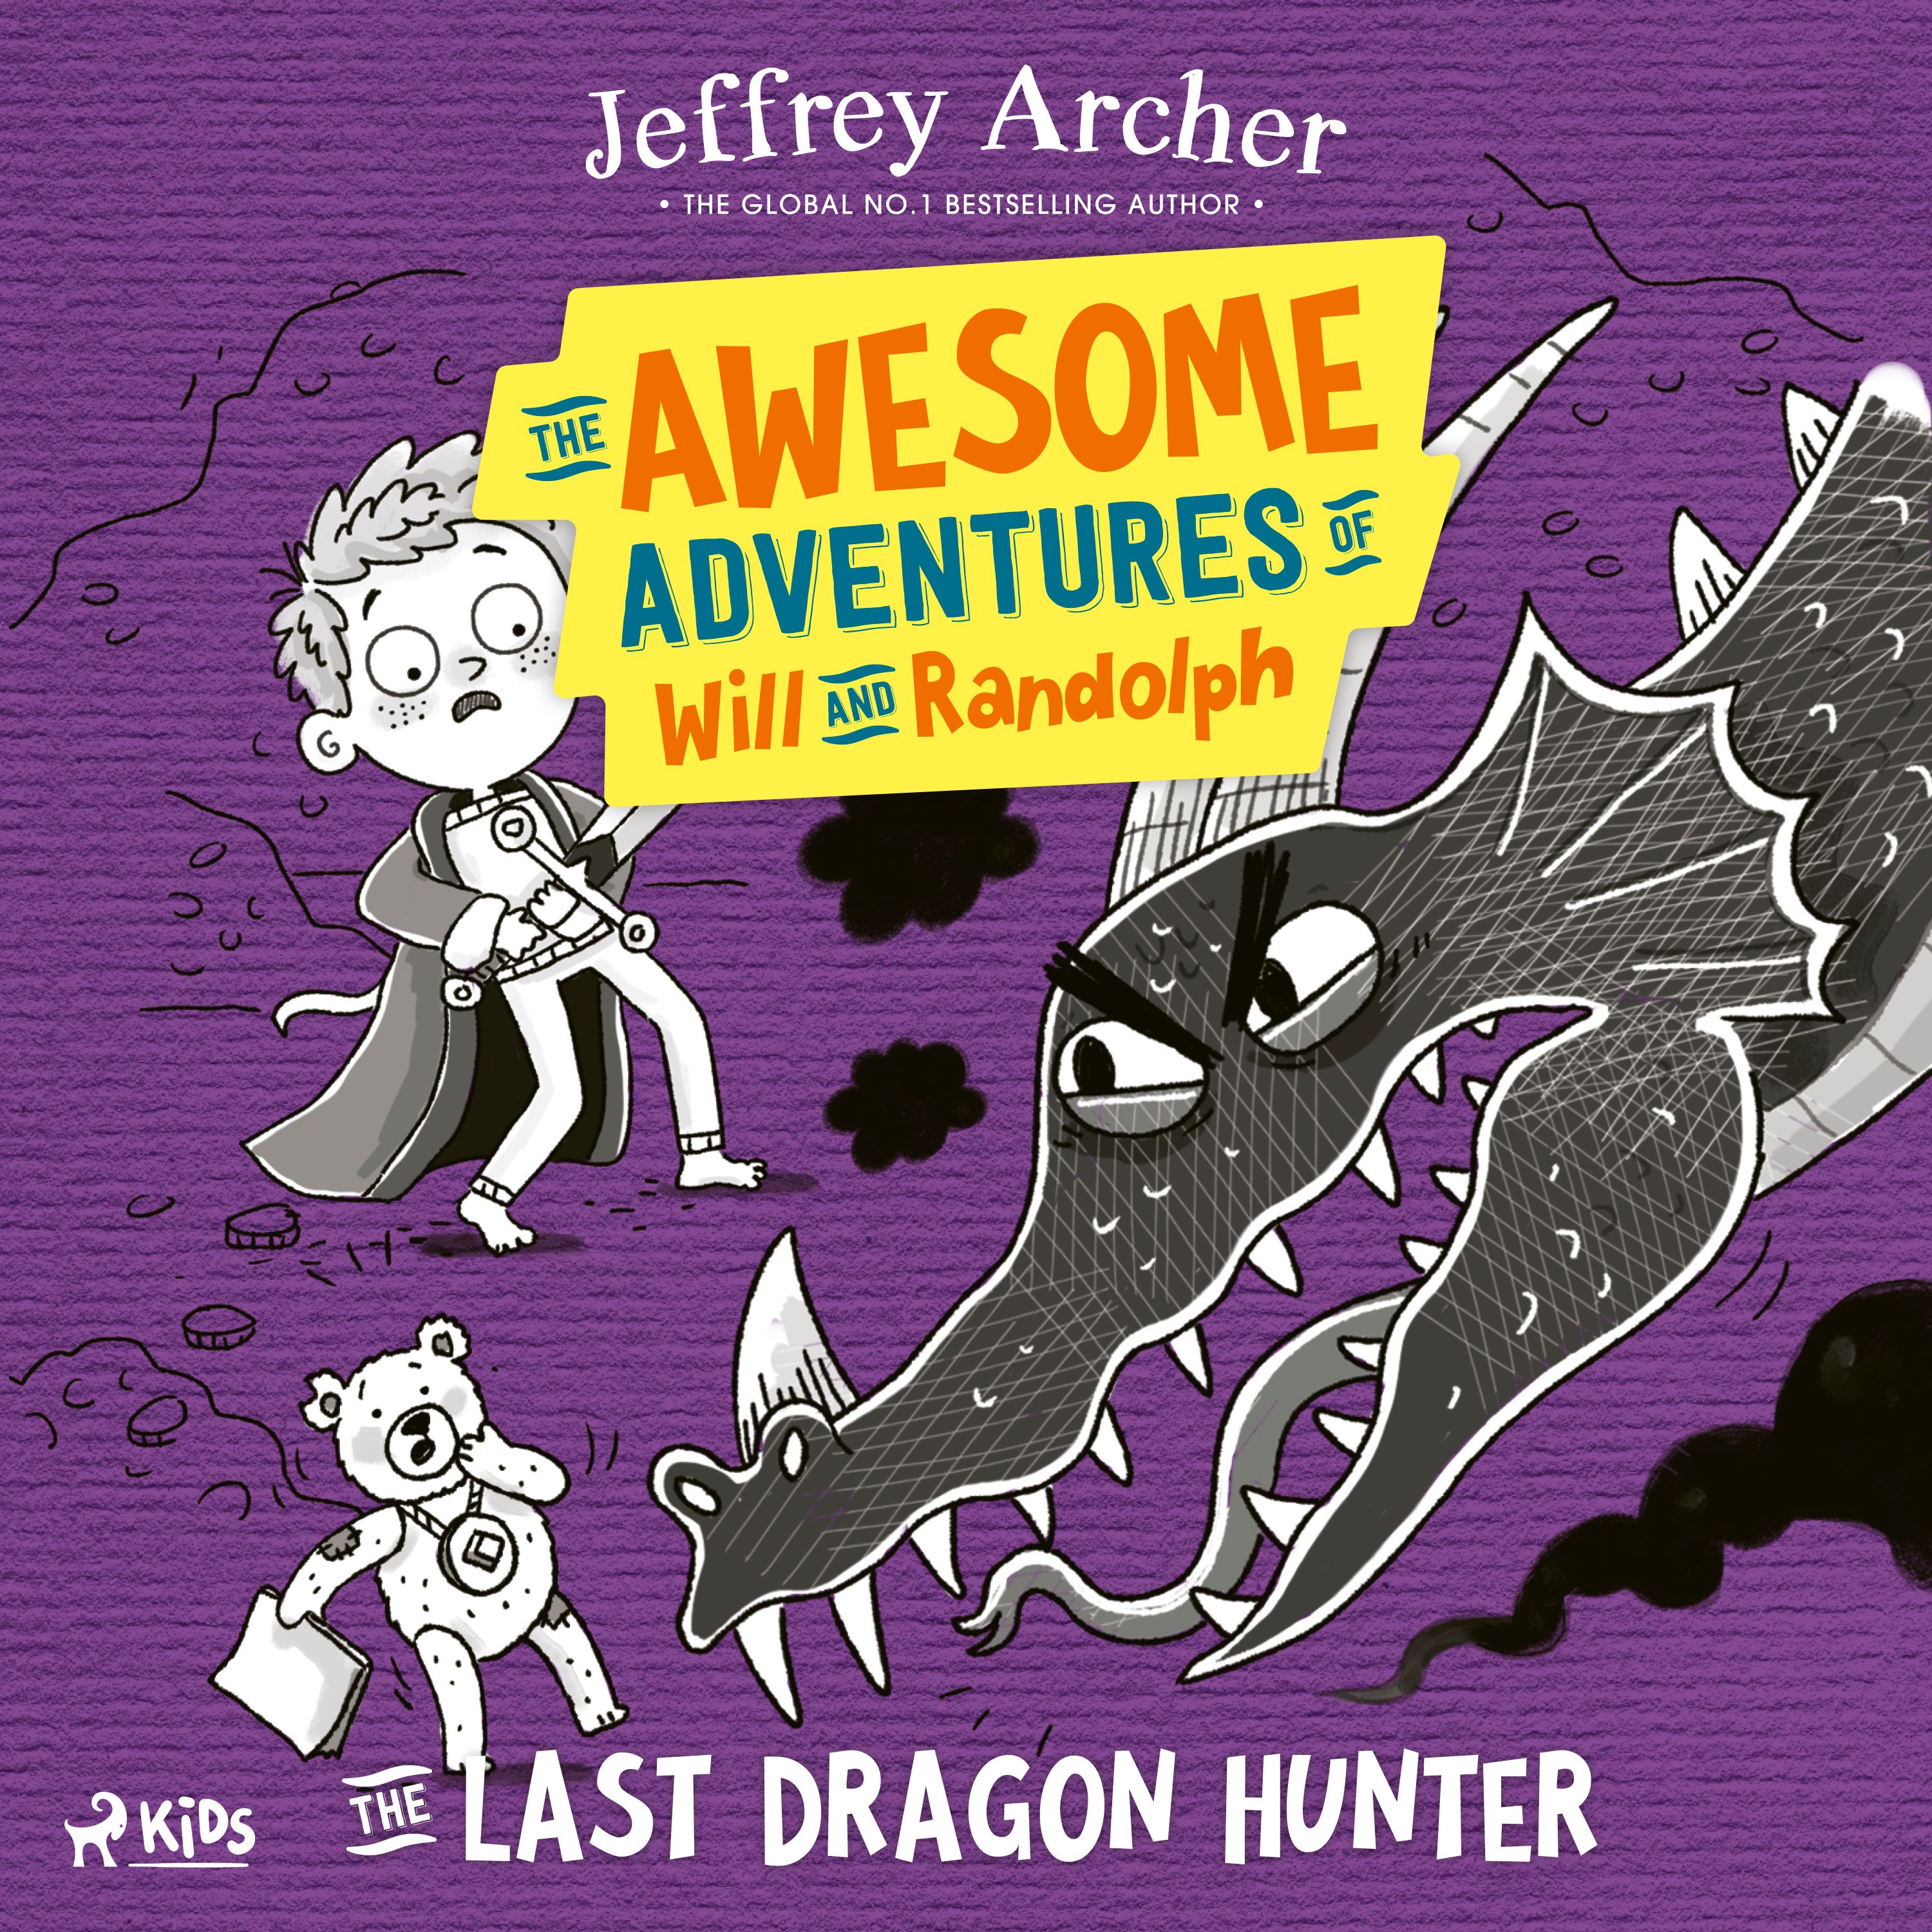 The Awesome Adventures of Will and Randolph: The Last Dragon Hunter, ljudbok av Jeffrey Archer